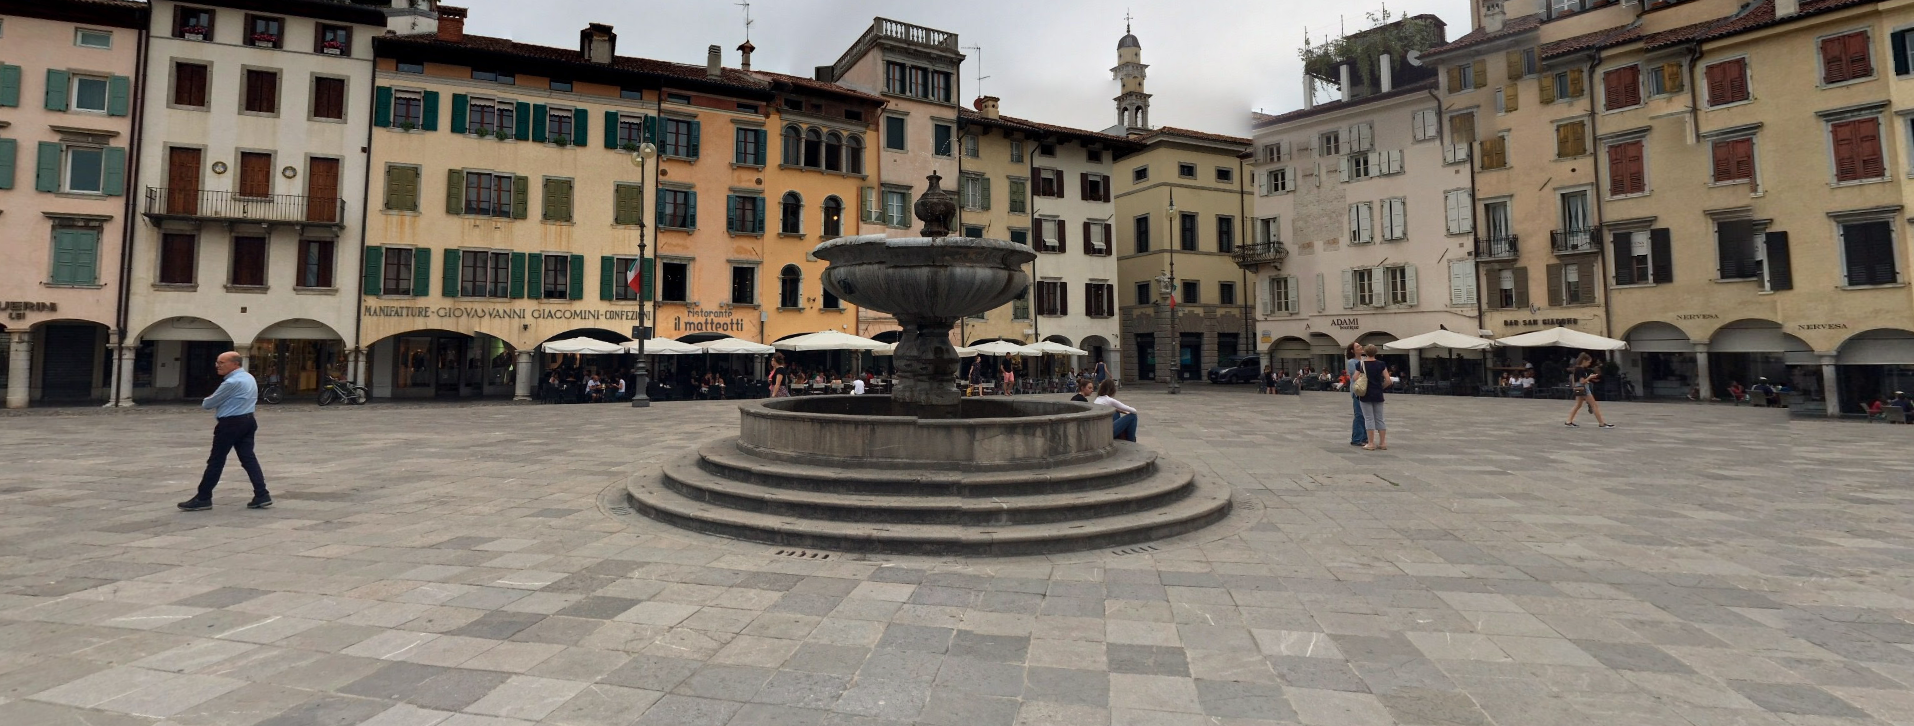 Piazza Matteotti by Google Earth